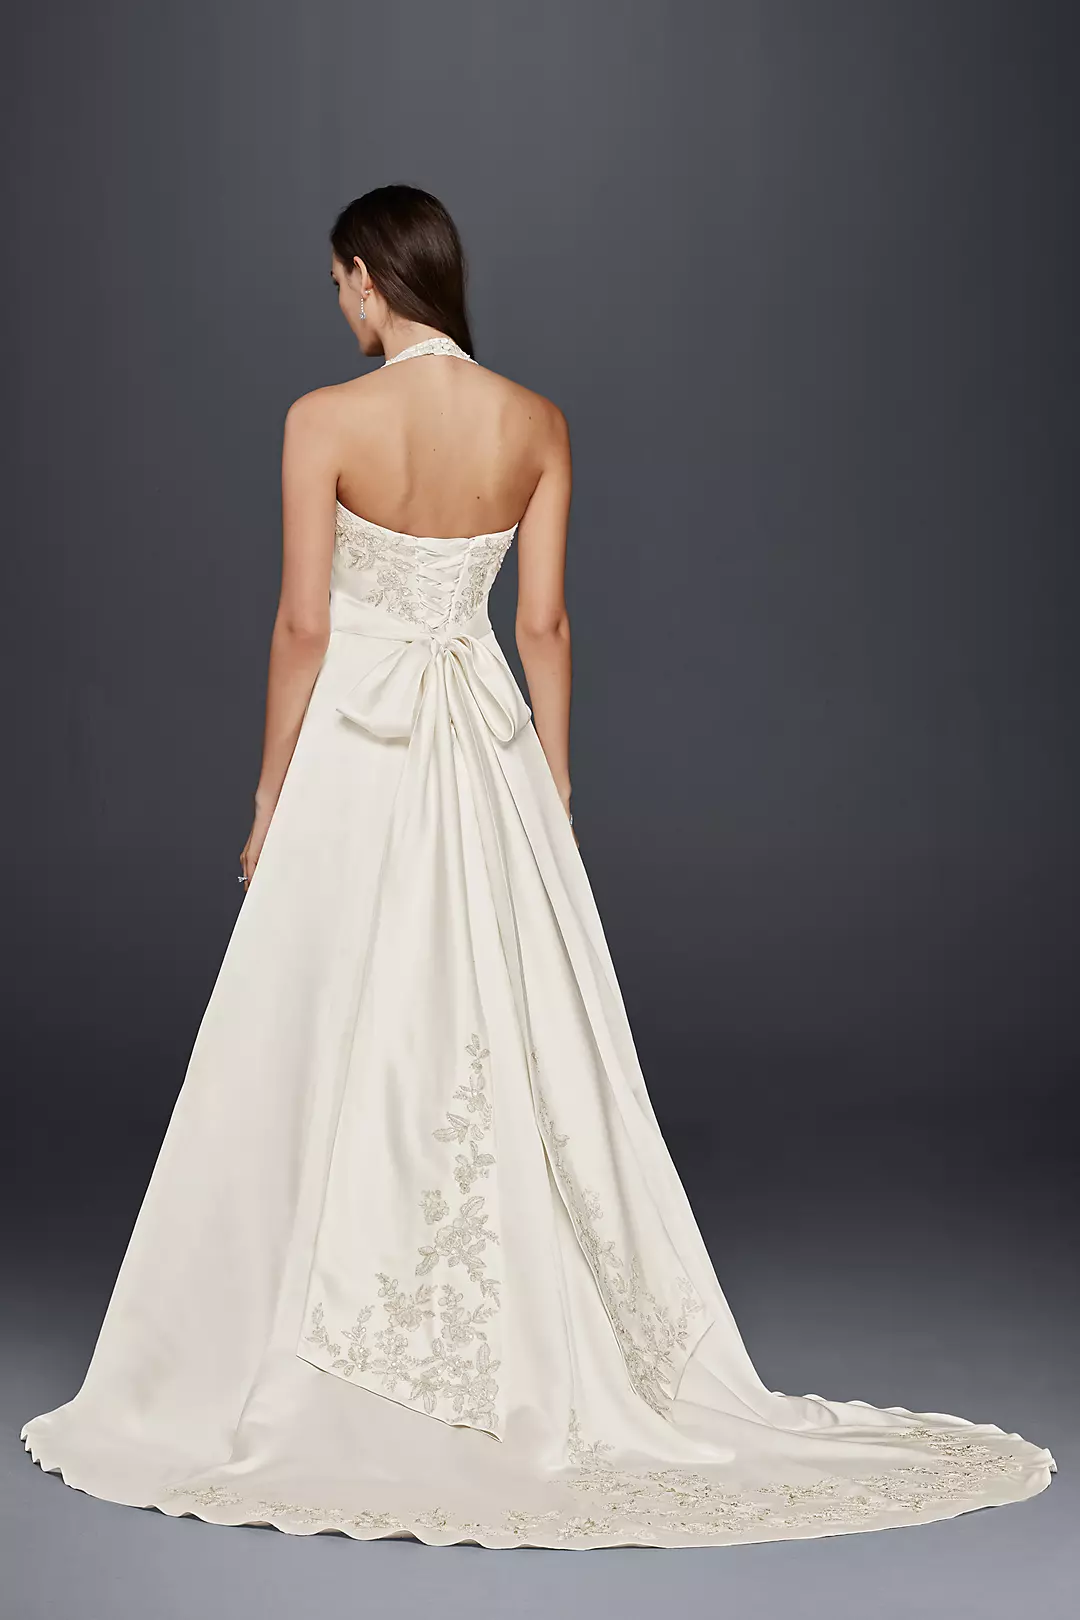 Halter A-Line Wedding Dress with Lace Appliques | David's Bridal